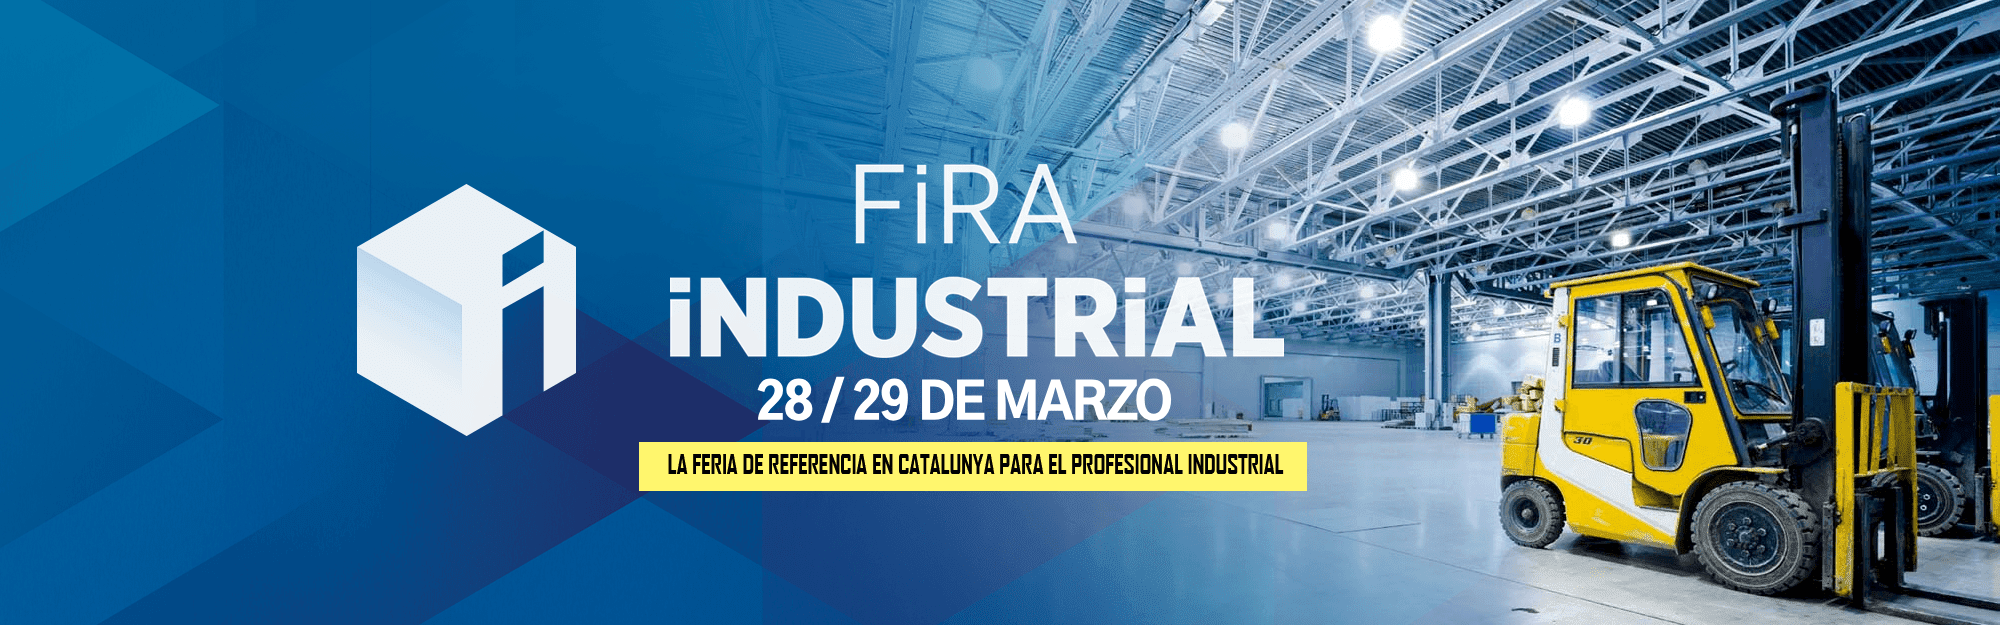 Fira Industrial Sabadell